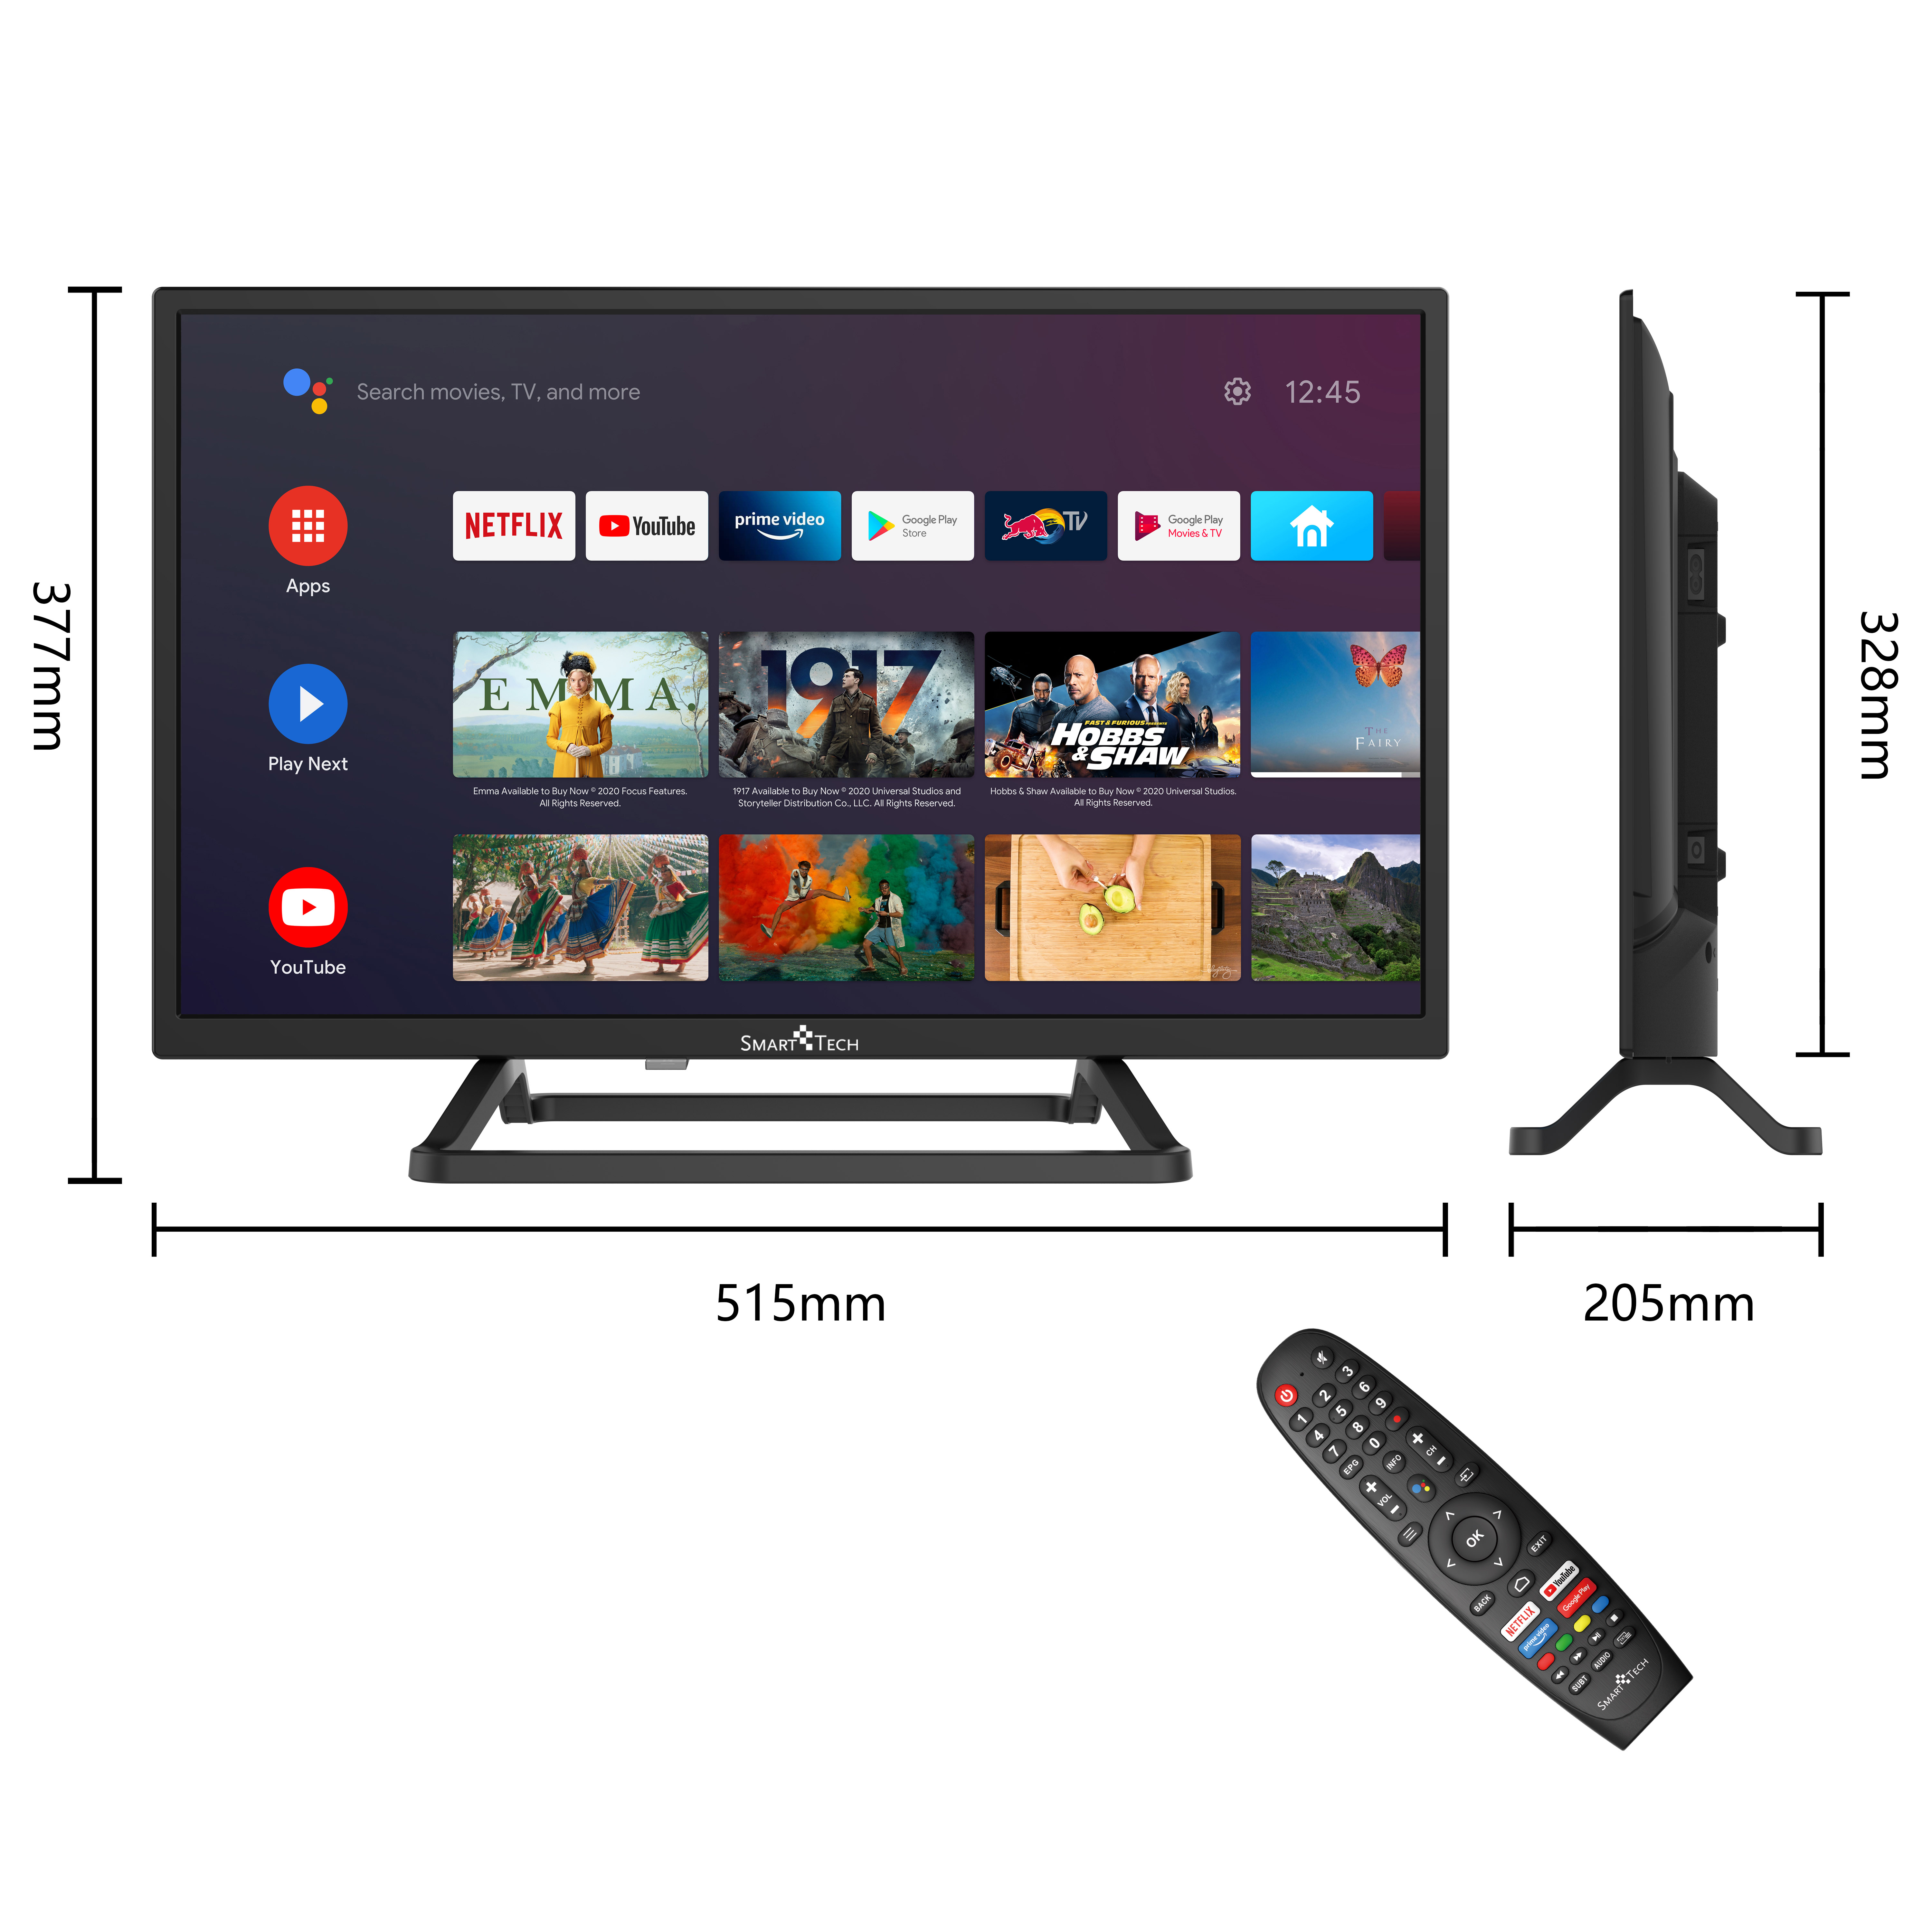 SMART TV Android cm, LED HD, 24HA10T3 Zoll 60 / Zoll TECH 9.0) Smart 24 TV (Flat, 24